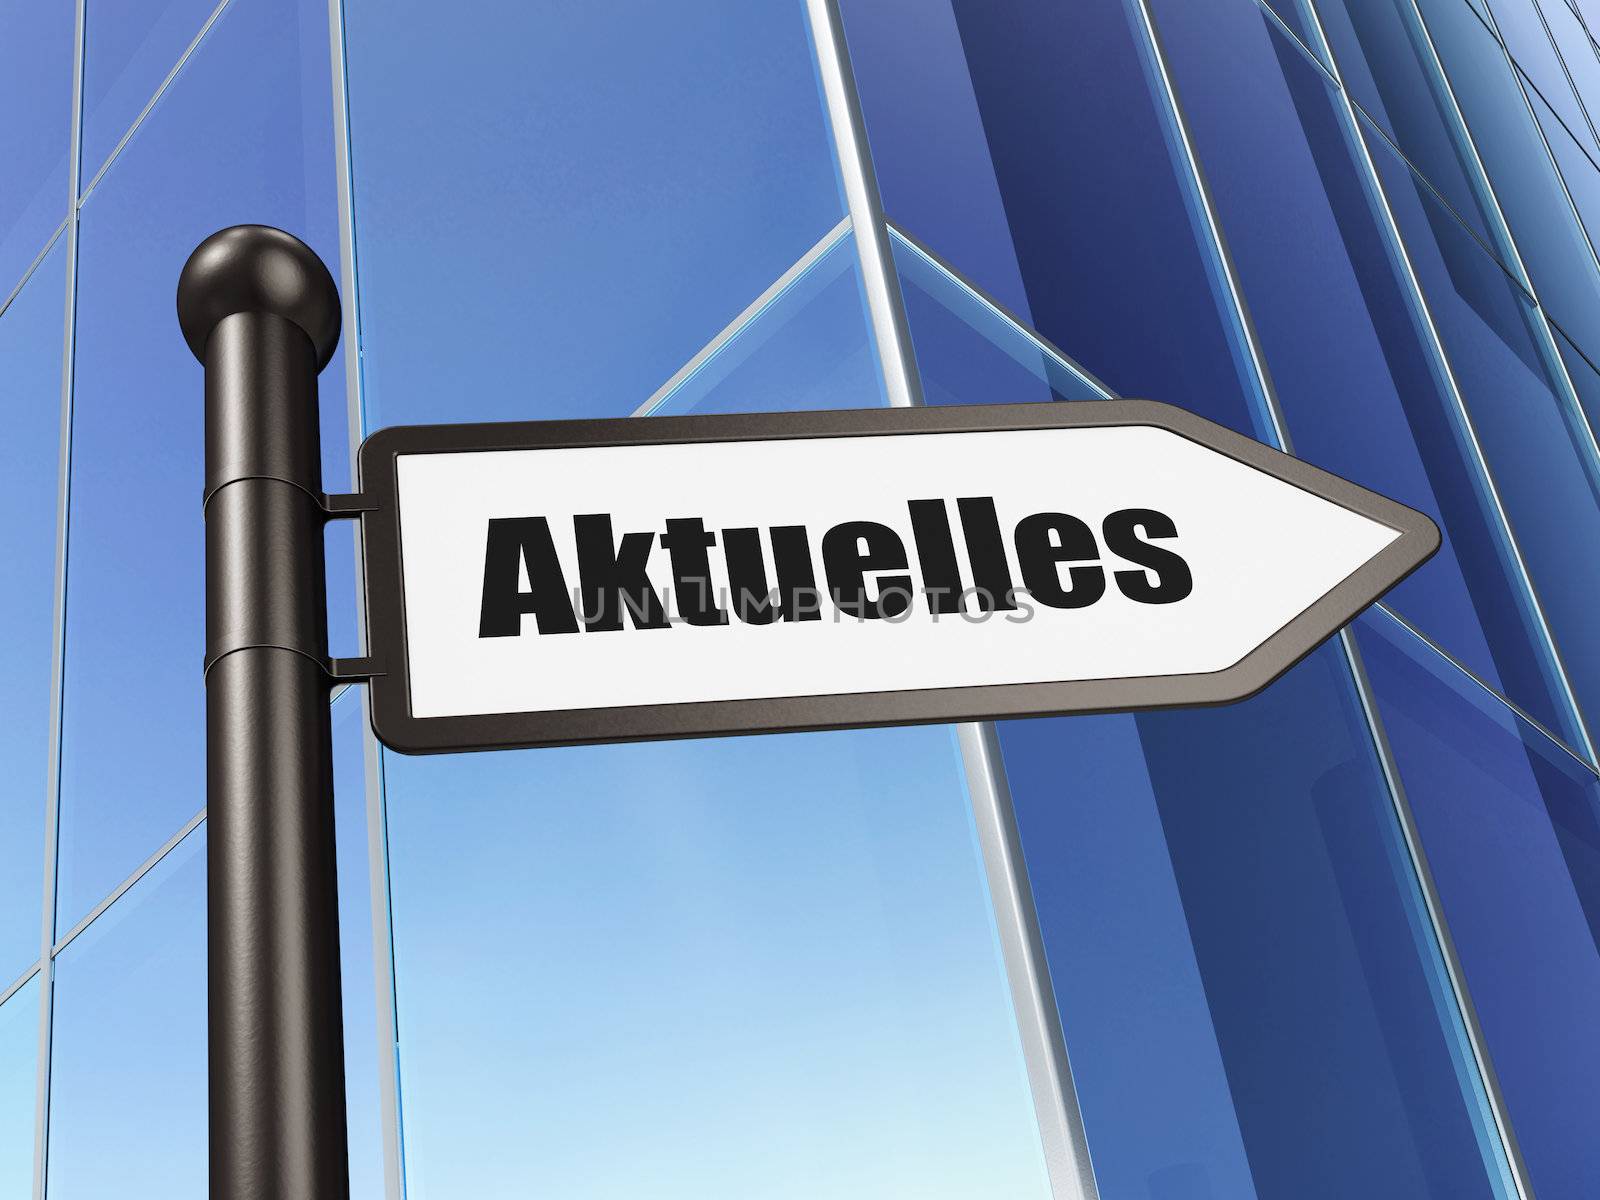 News concept: Aktuelles(german) on Building background, 3d render